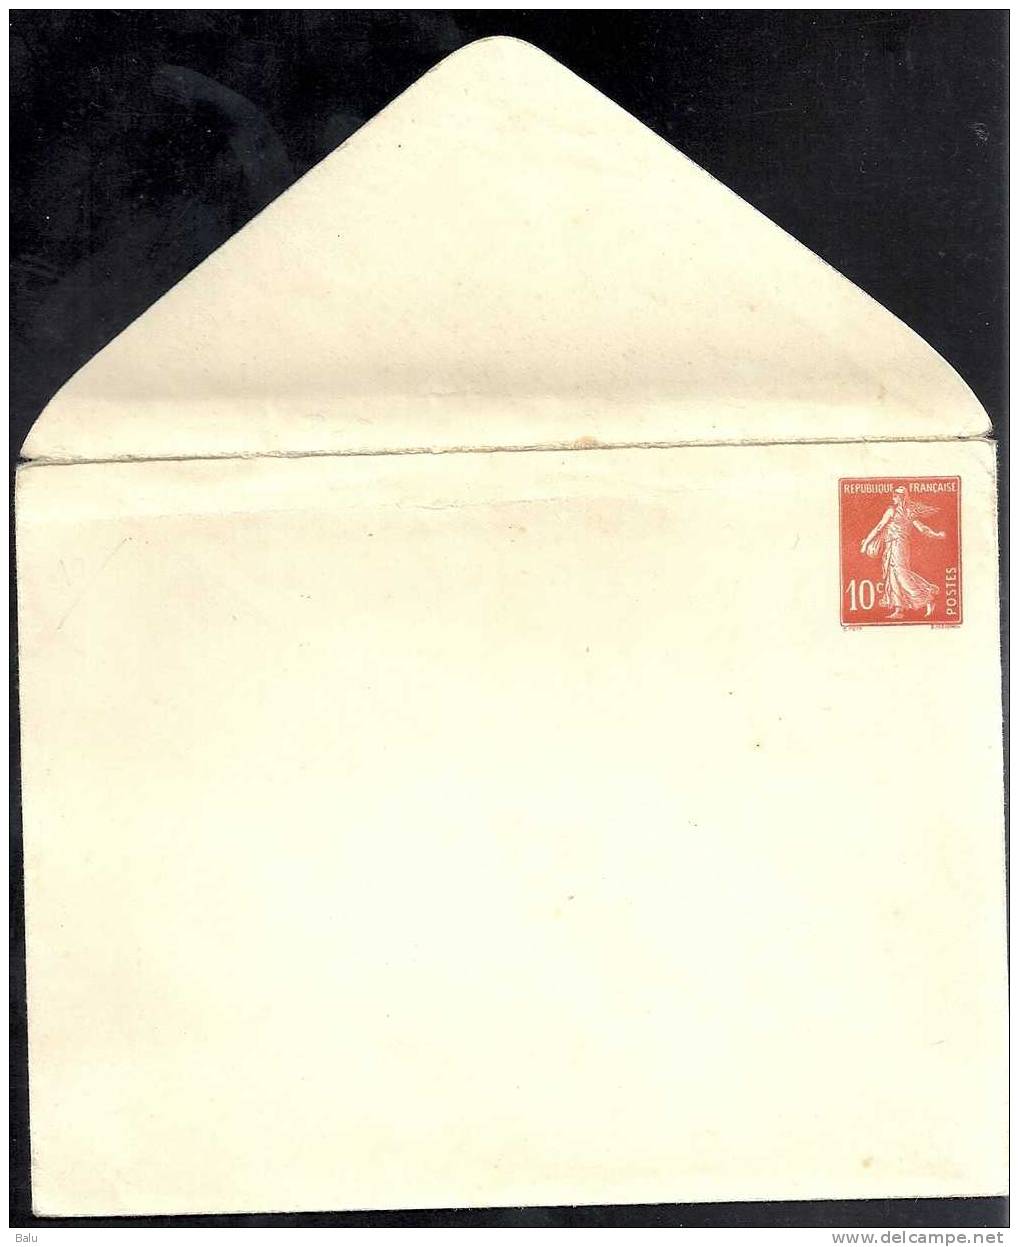 France Entier Postal Yvert No. 138-E7 Enveloppe Type Semeuse Plein 10c Rouge Daté 048 147x112 Mm NEUF Gomme Original - Standard- Und TSC-Briefe (vor 1995)